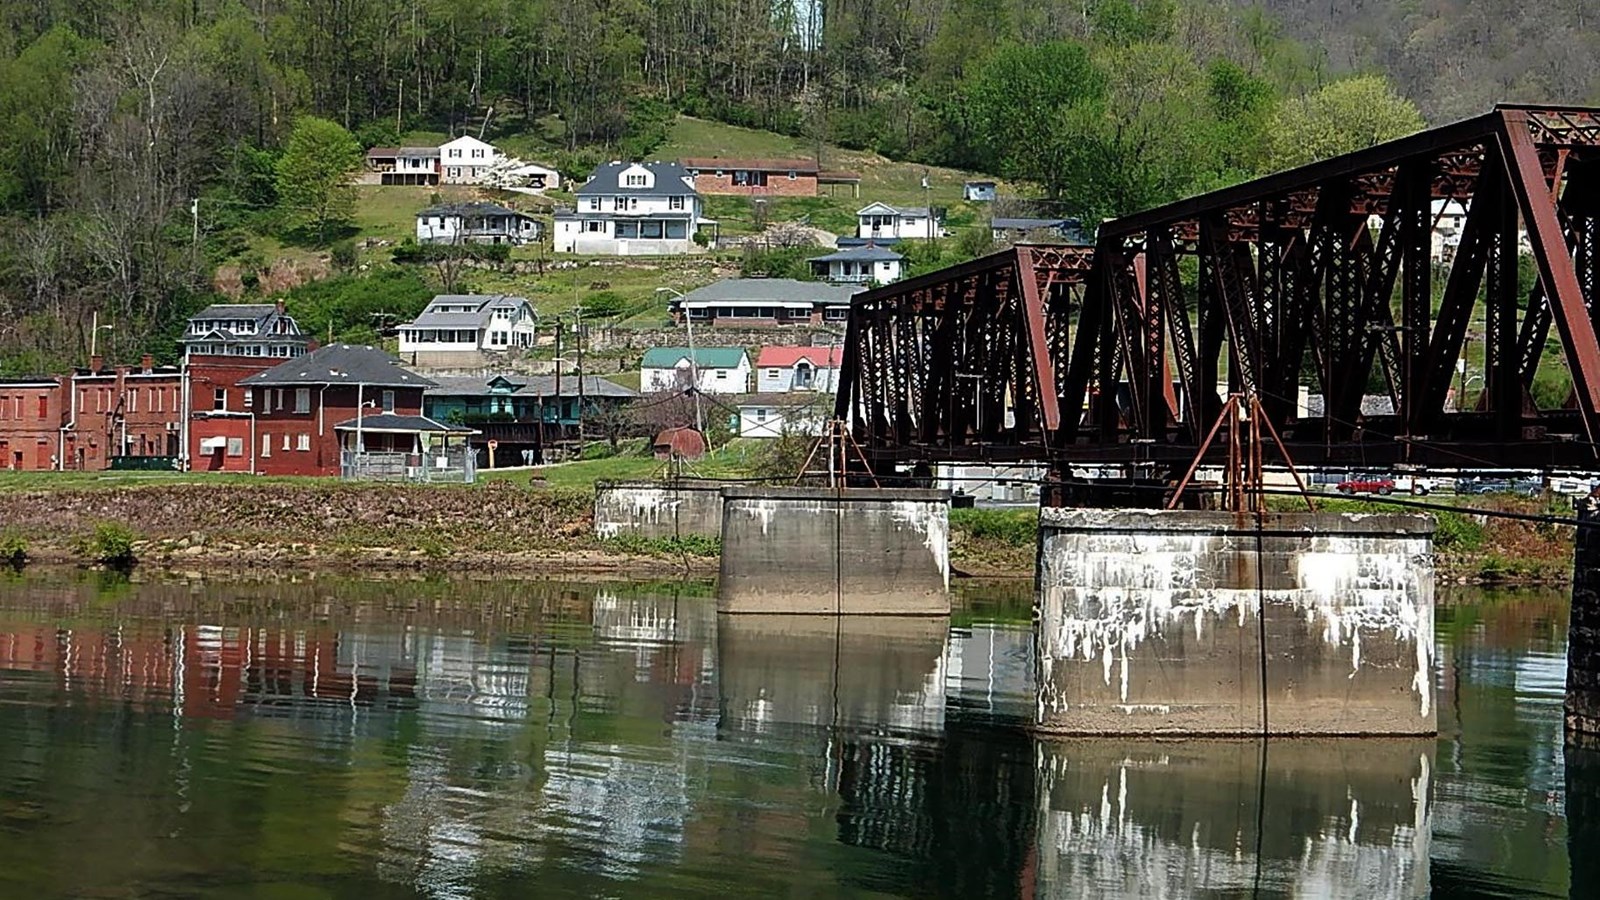 a bridge crosses a river leading into a small town